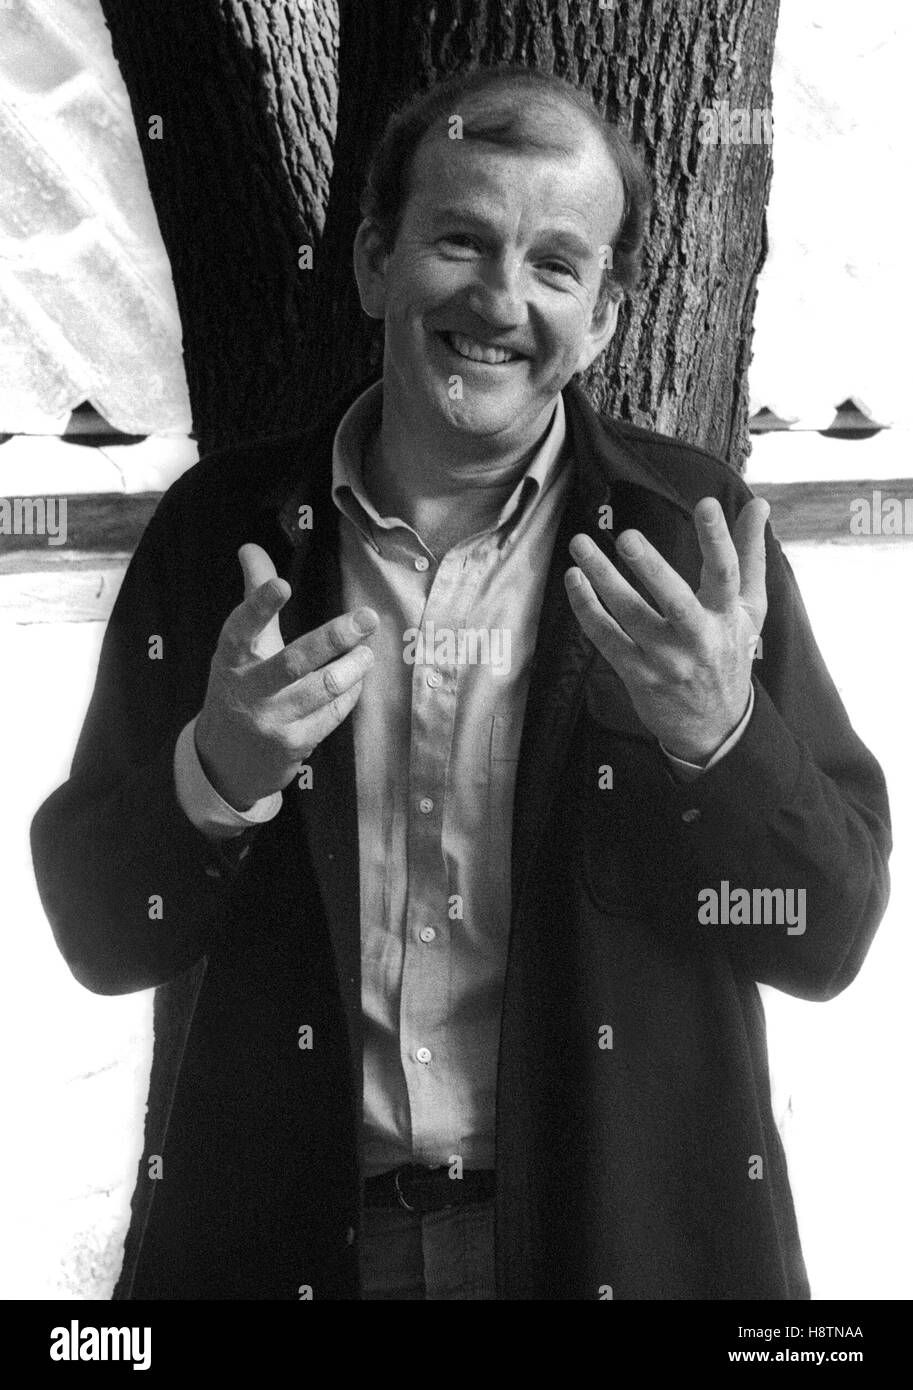 PAUL WATSON Director bei BBC für ¨The Family¨ 1987 Stockfoto